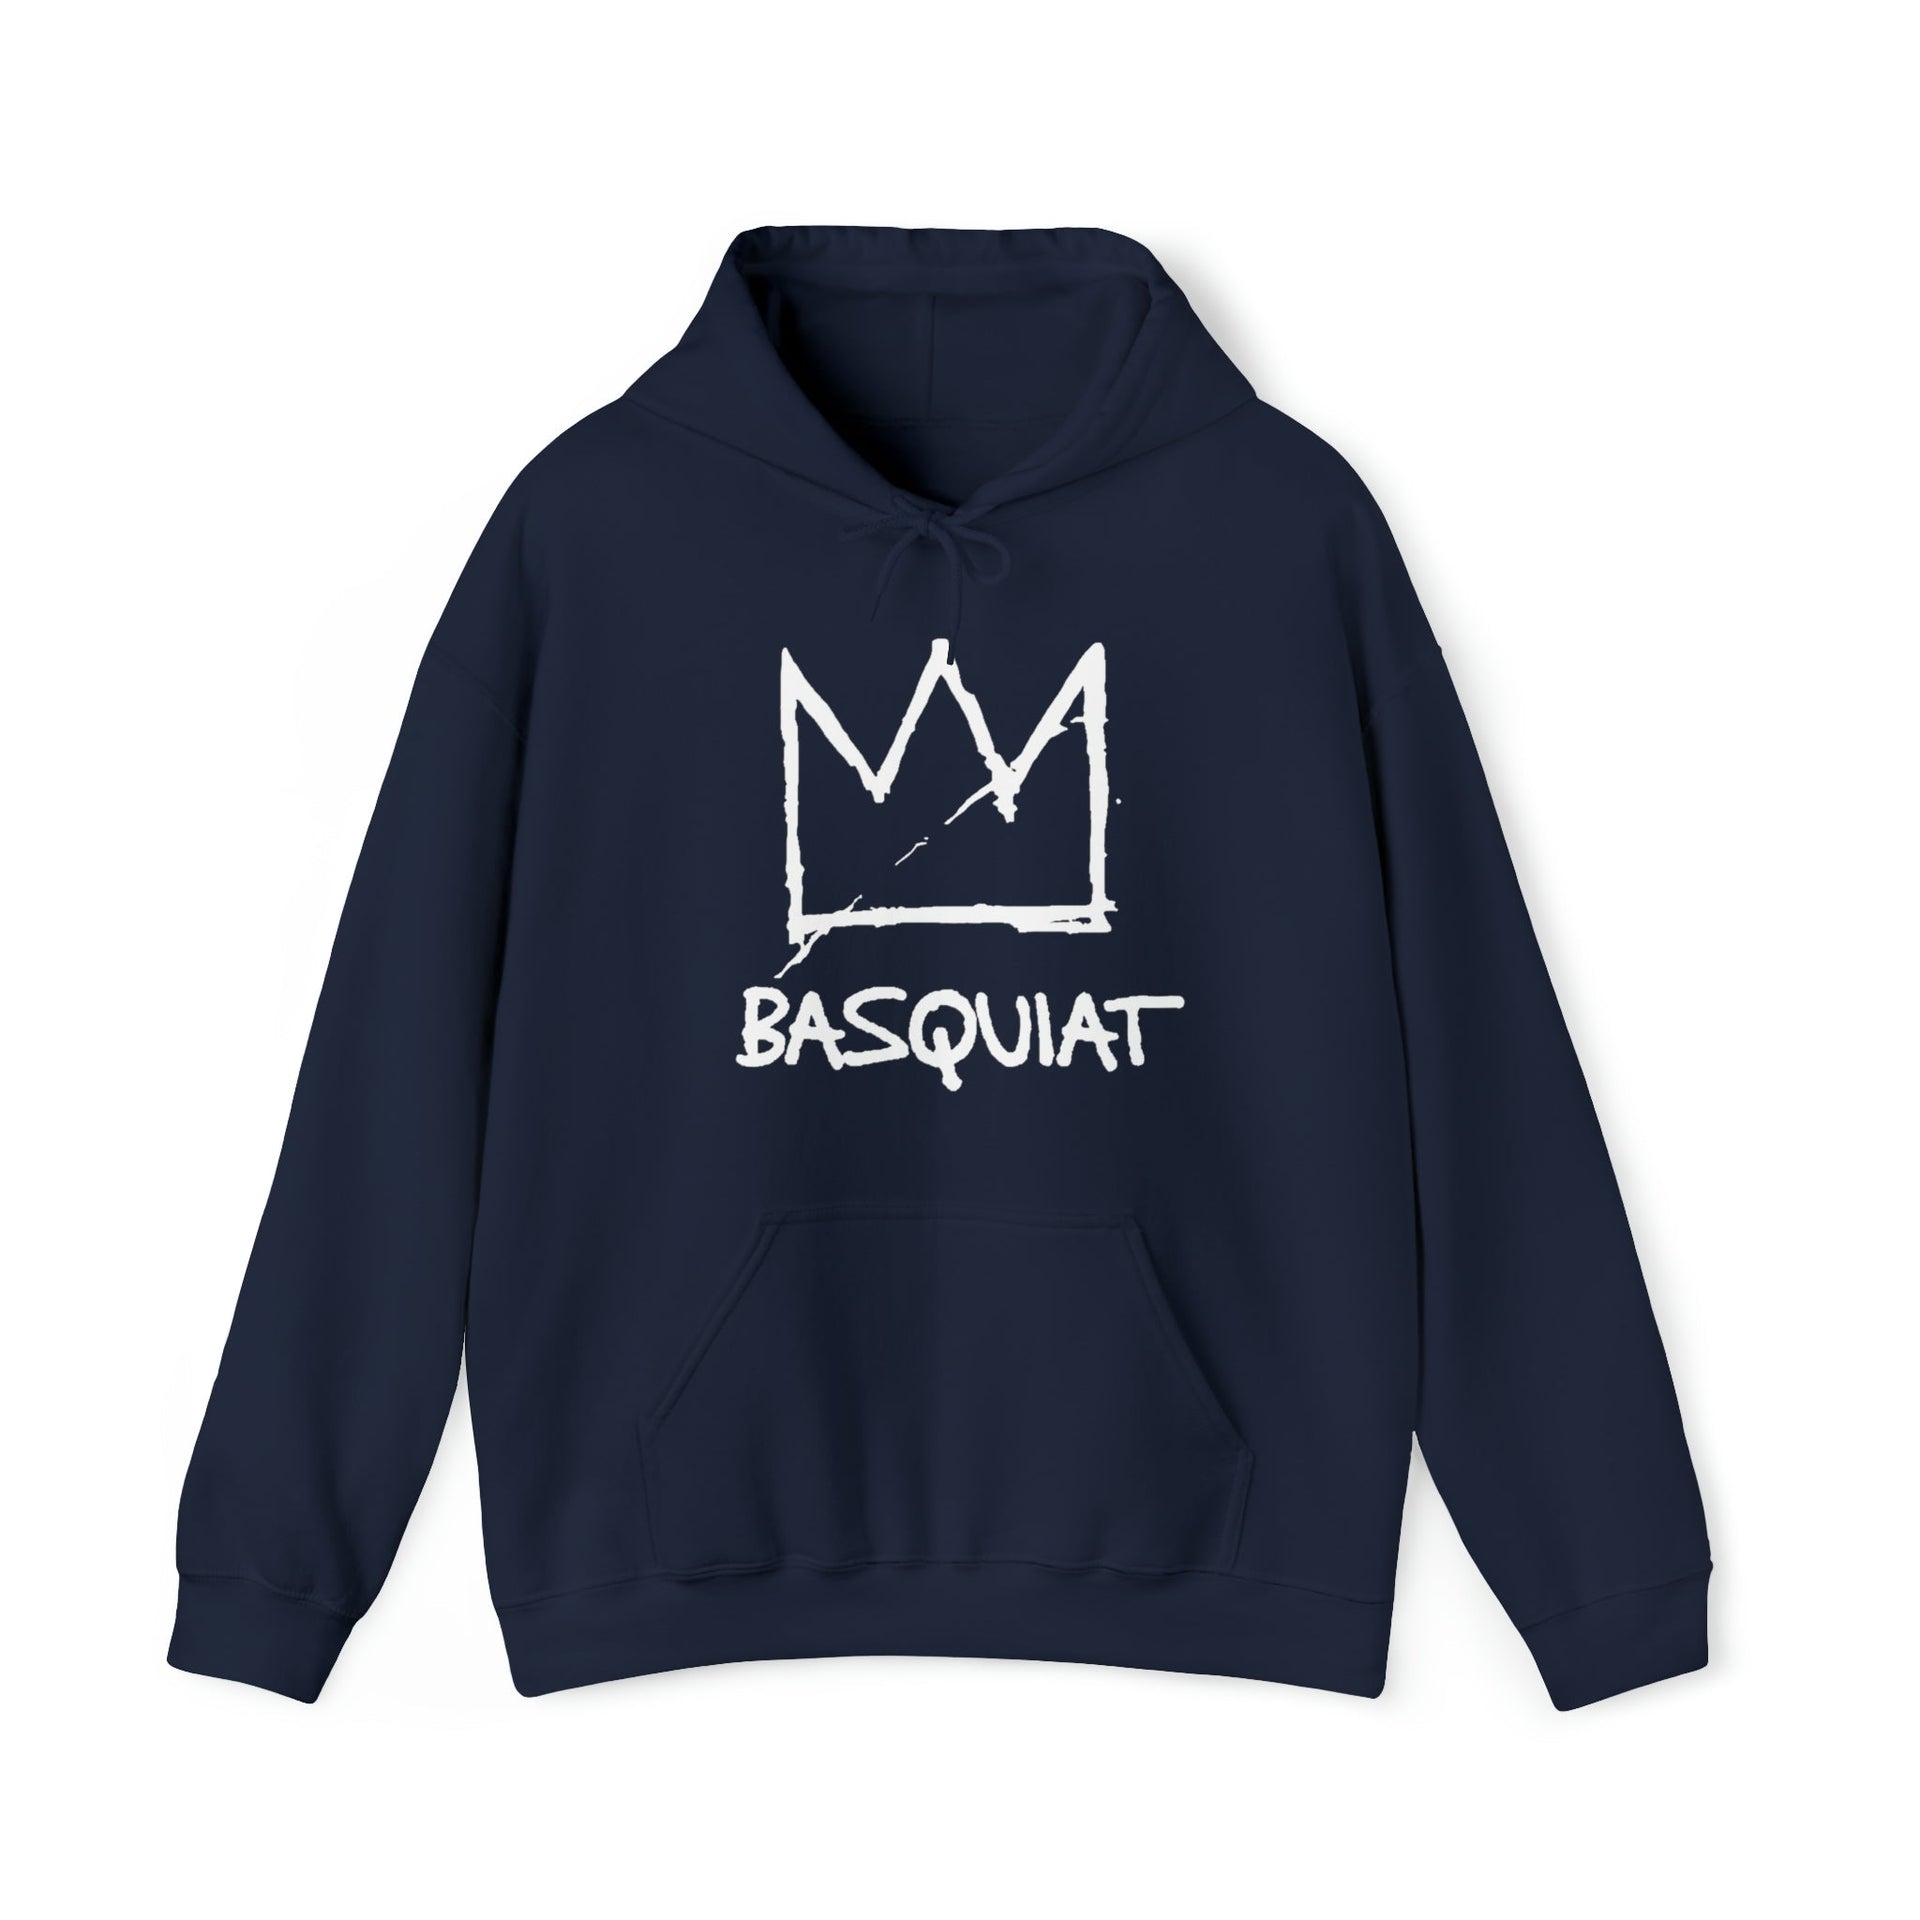 Basquiat Name with Crown Hoodie - Clothing - Harvey Ltd